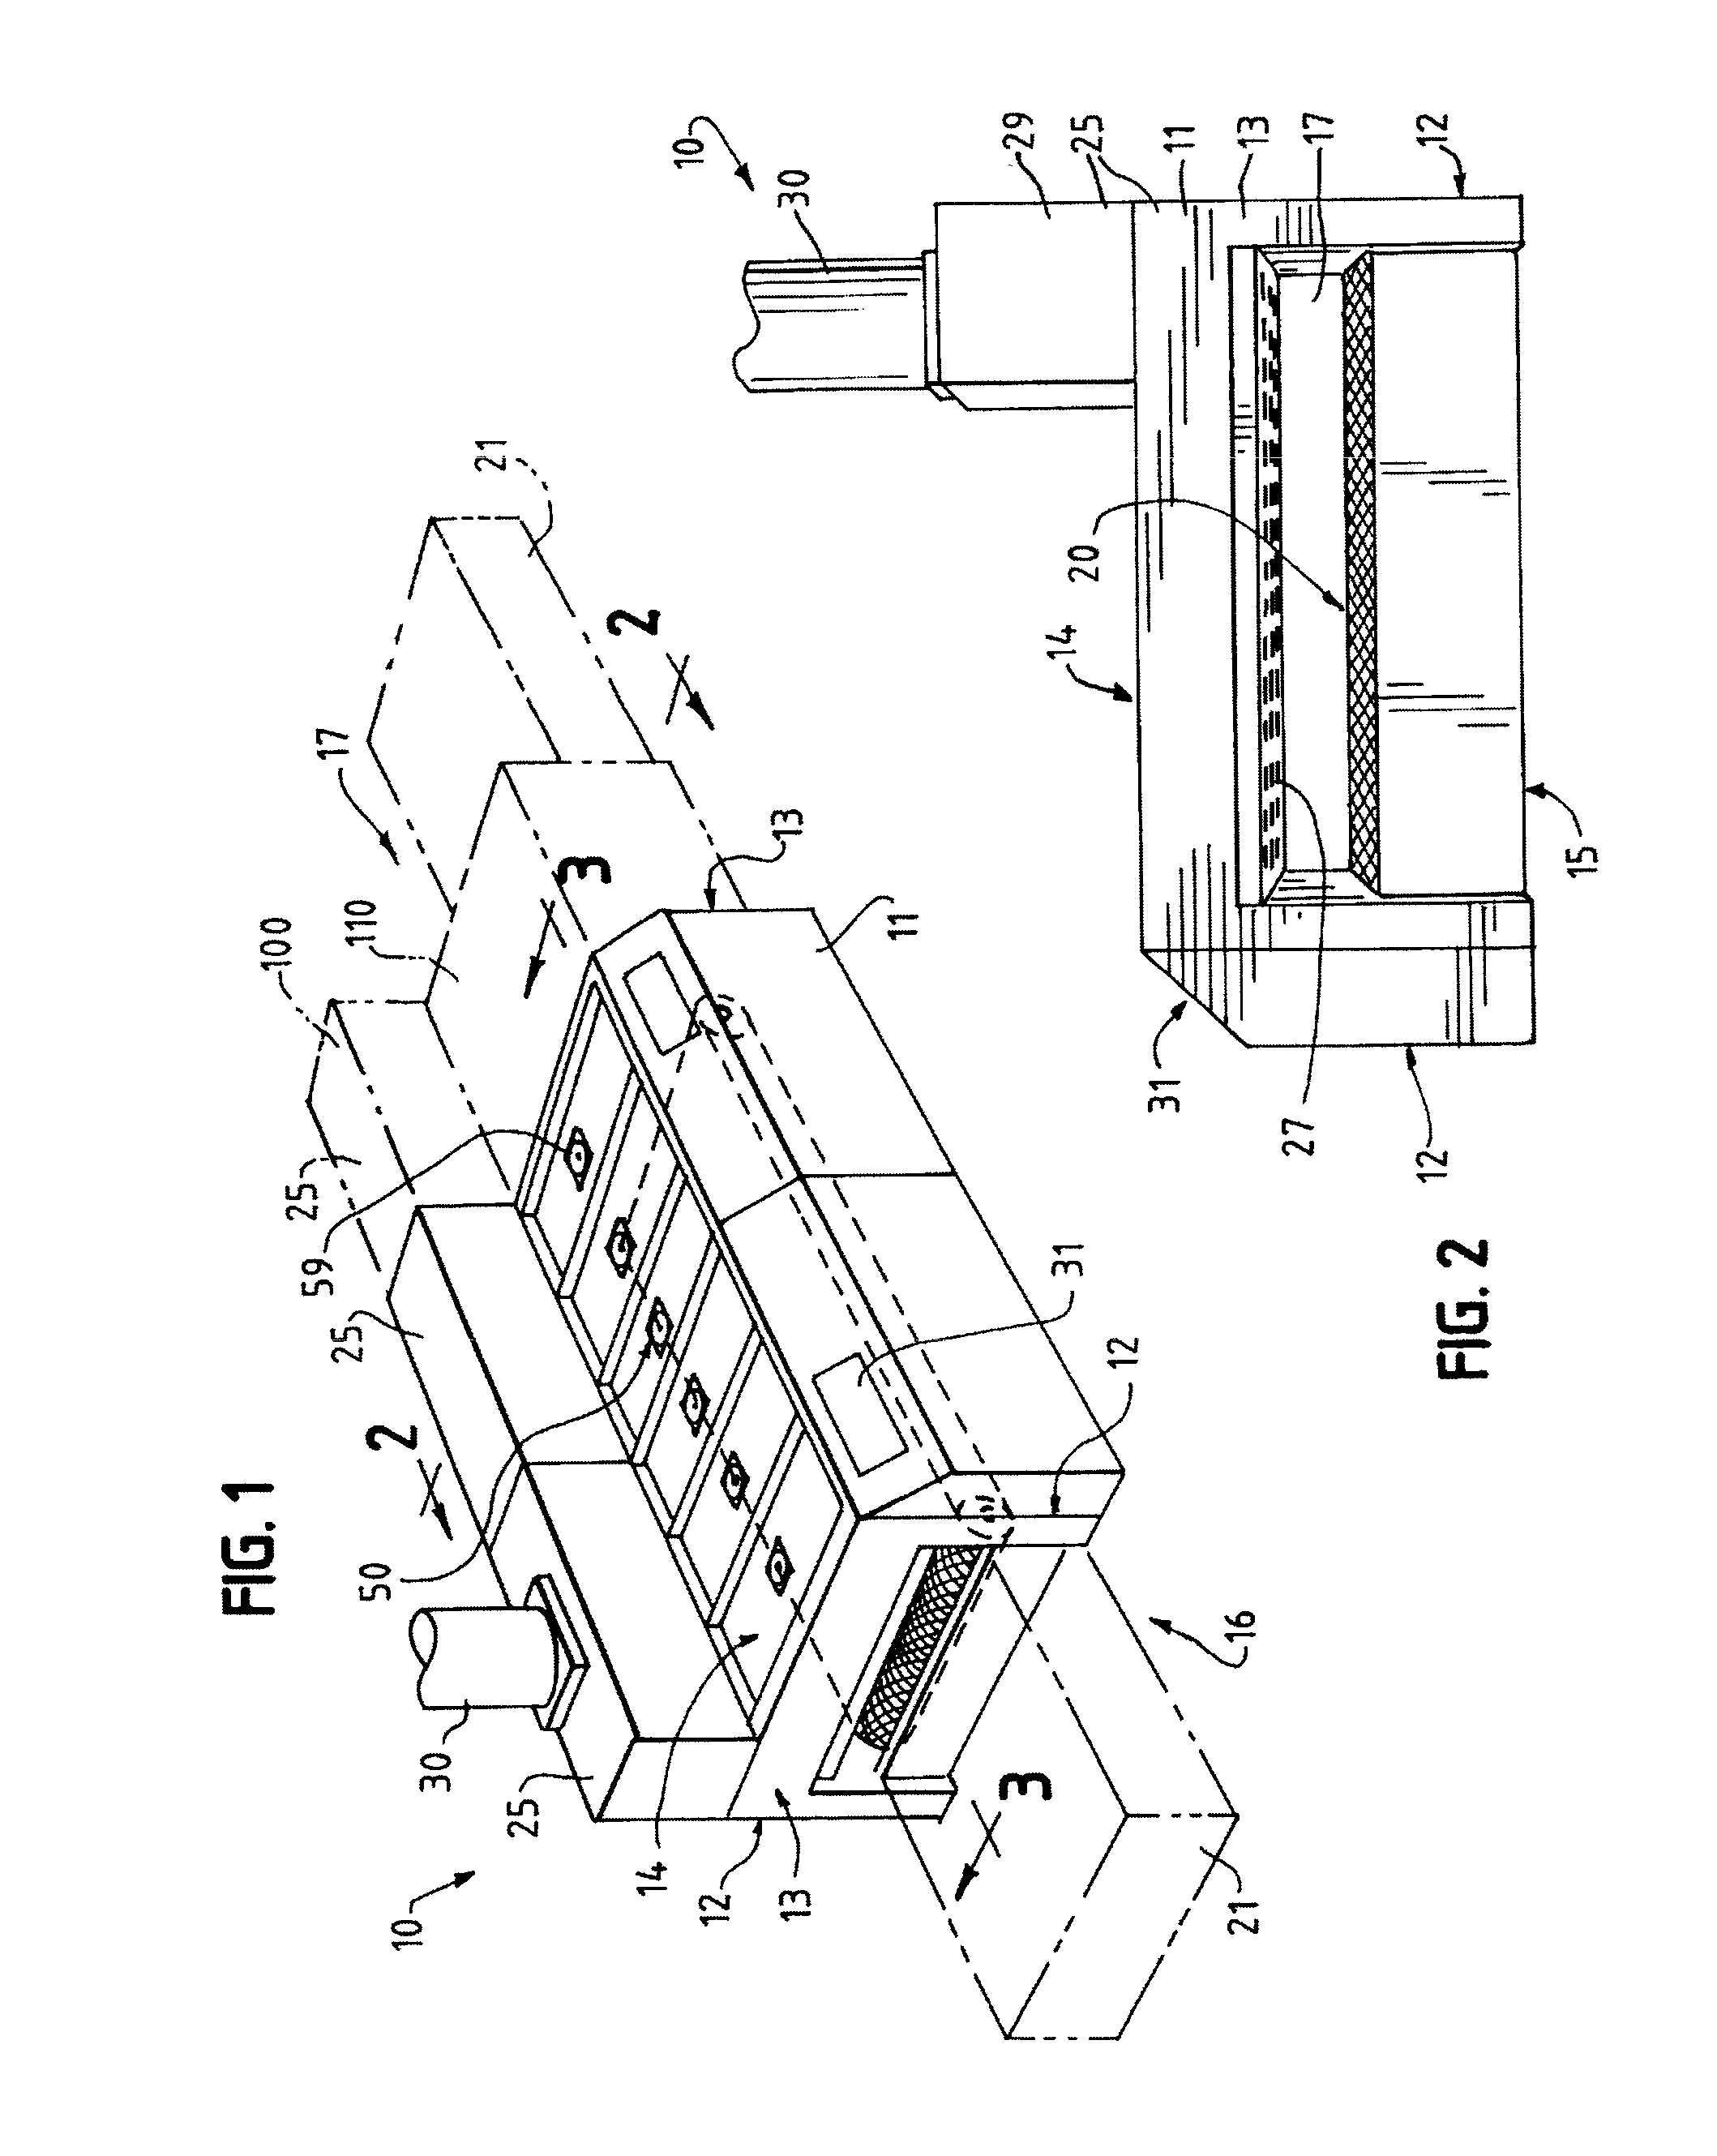 Dryer Conveyor Speed Control Apparatus and Method